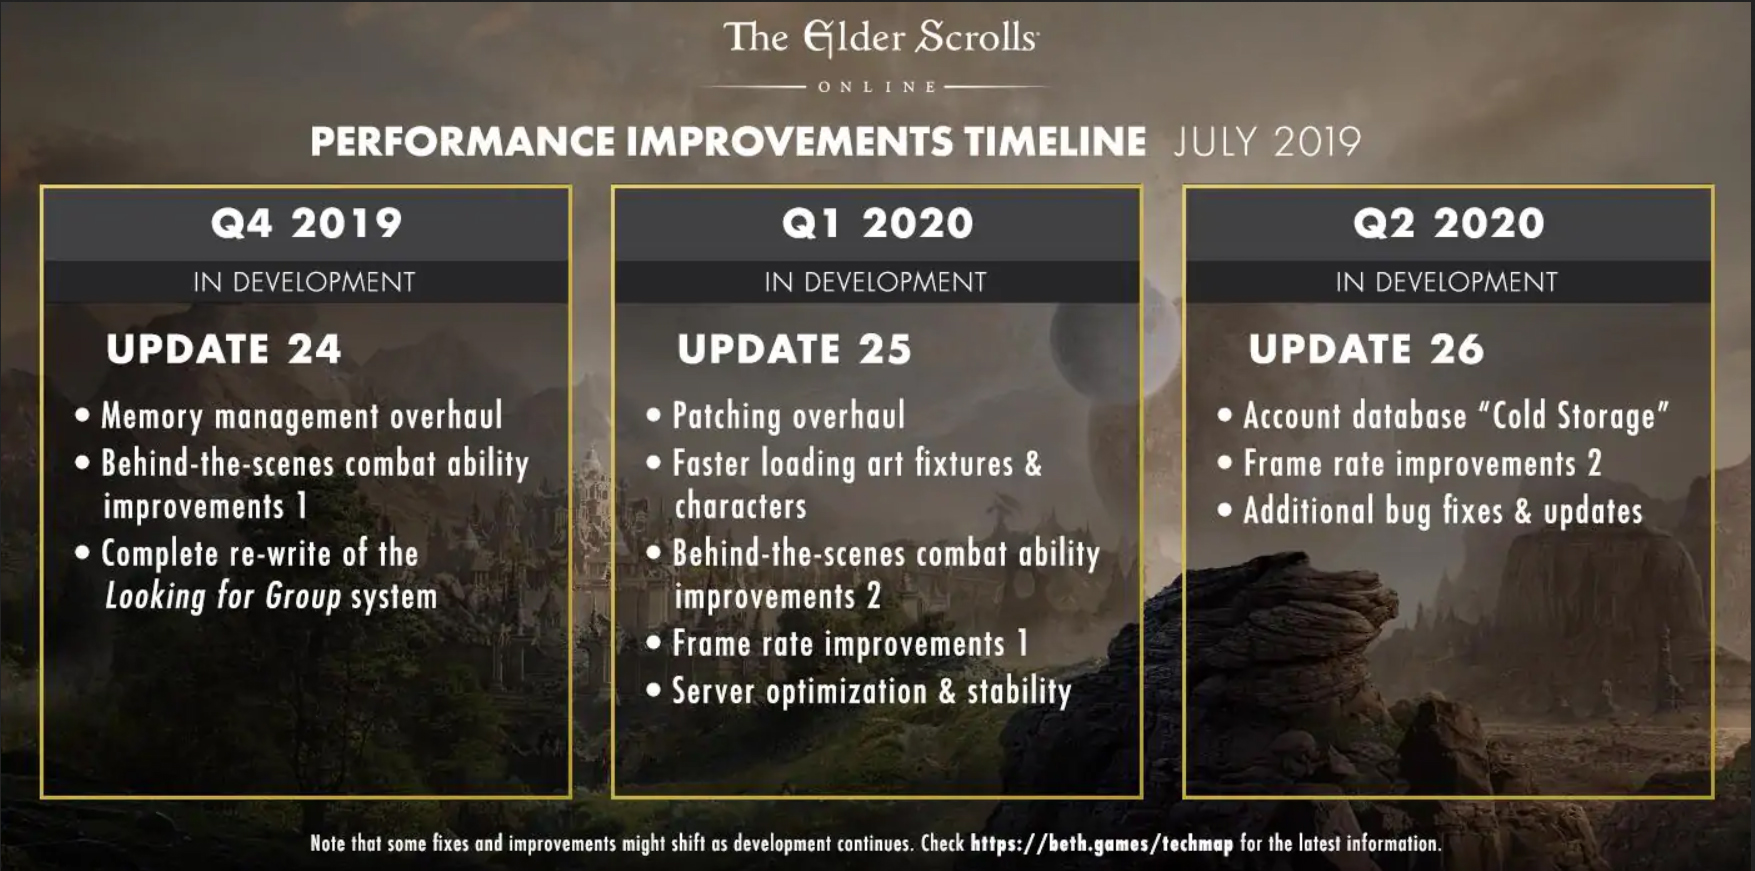 The Elder Scrolls Online Reveals Performance Improvement Roadmap For